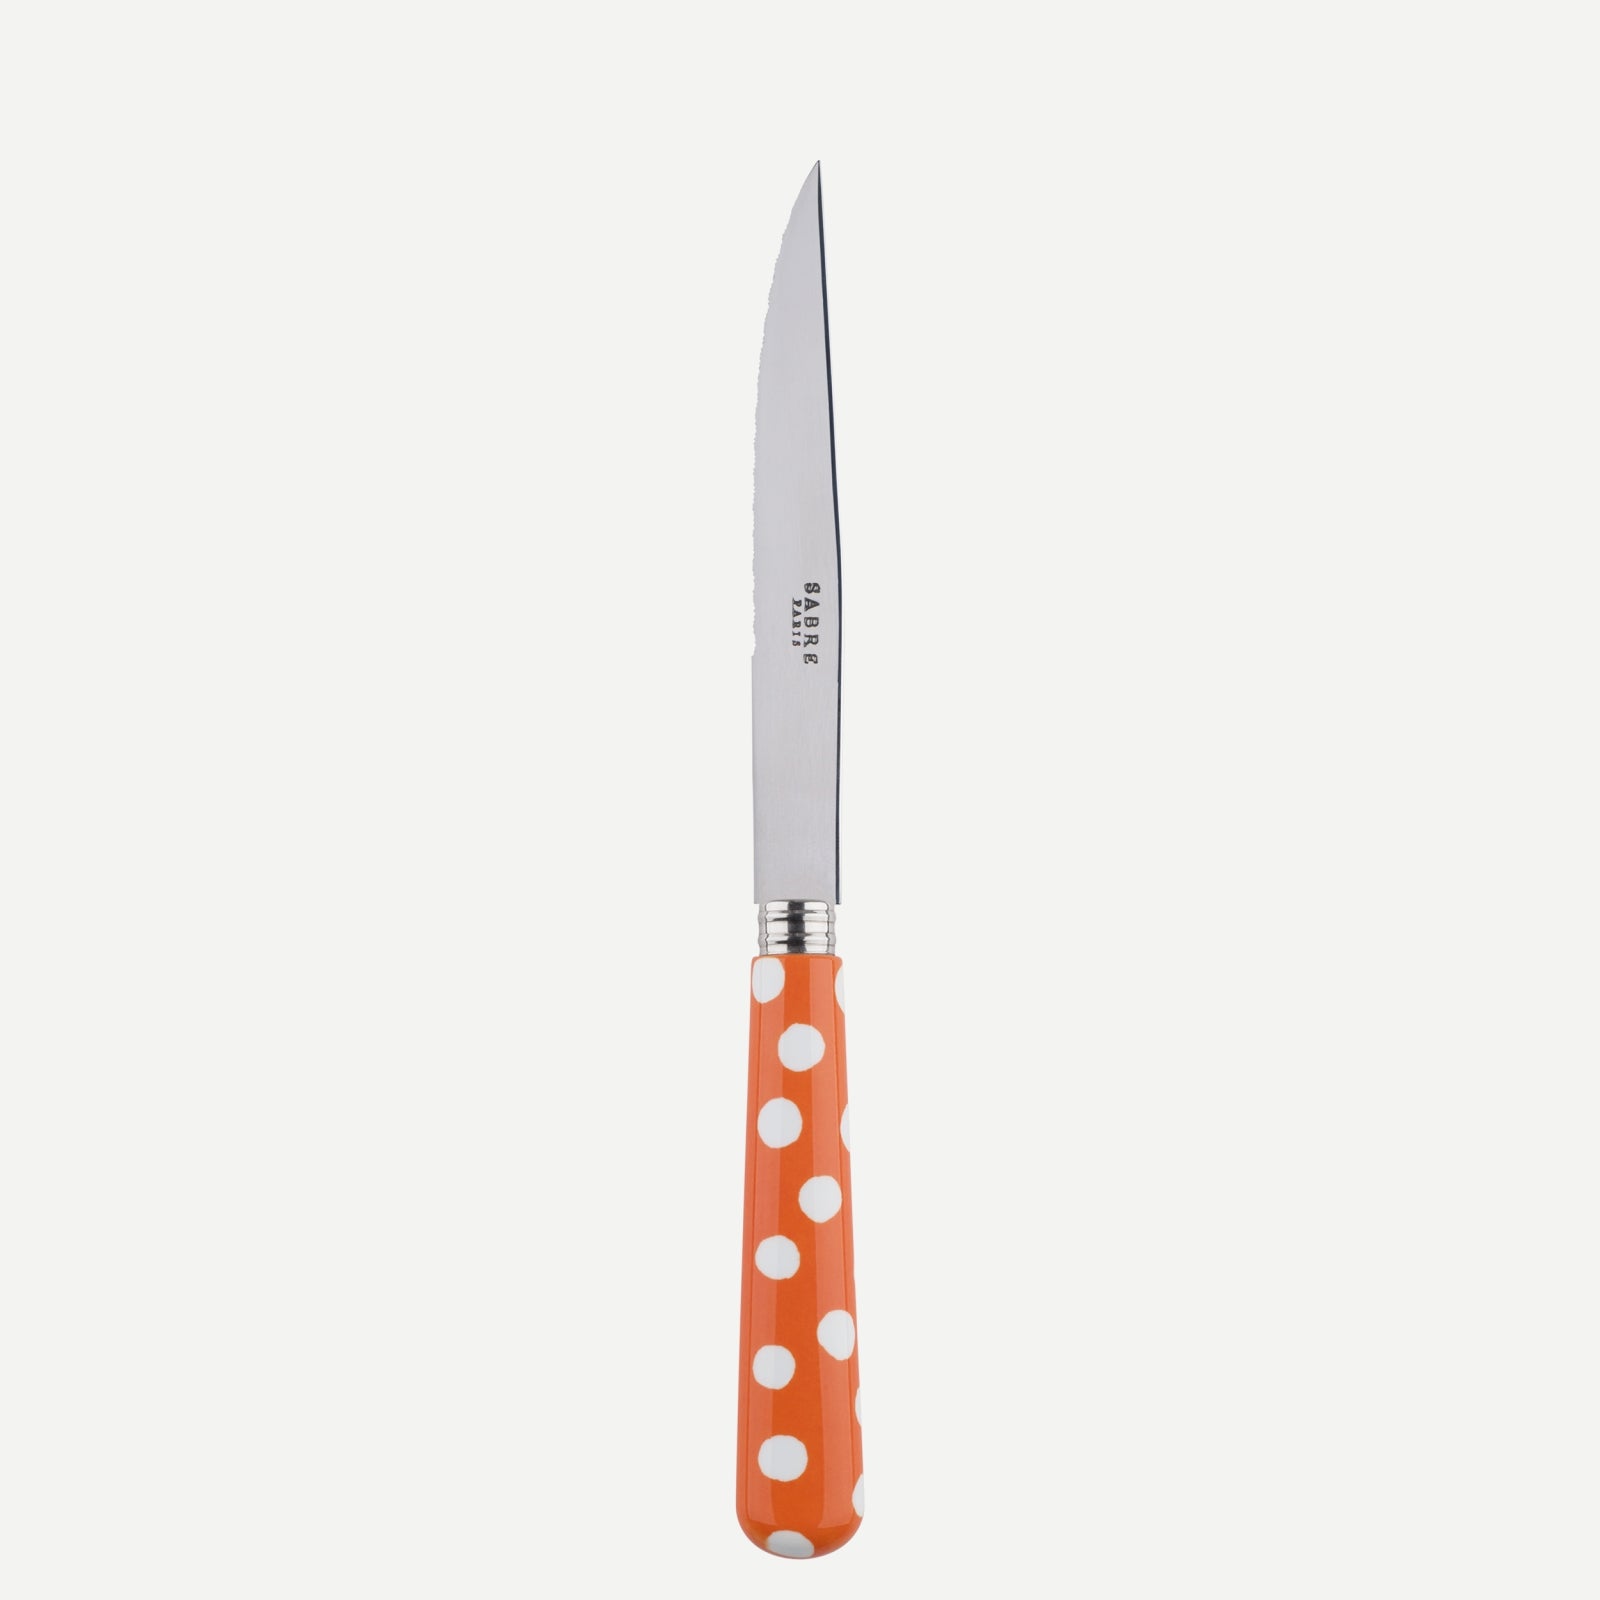 Steack knife - White Dots. - Orange